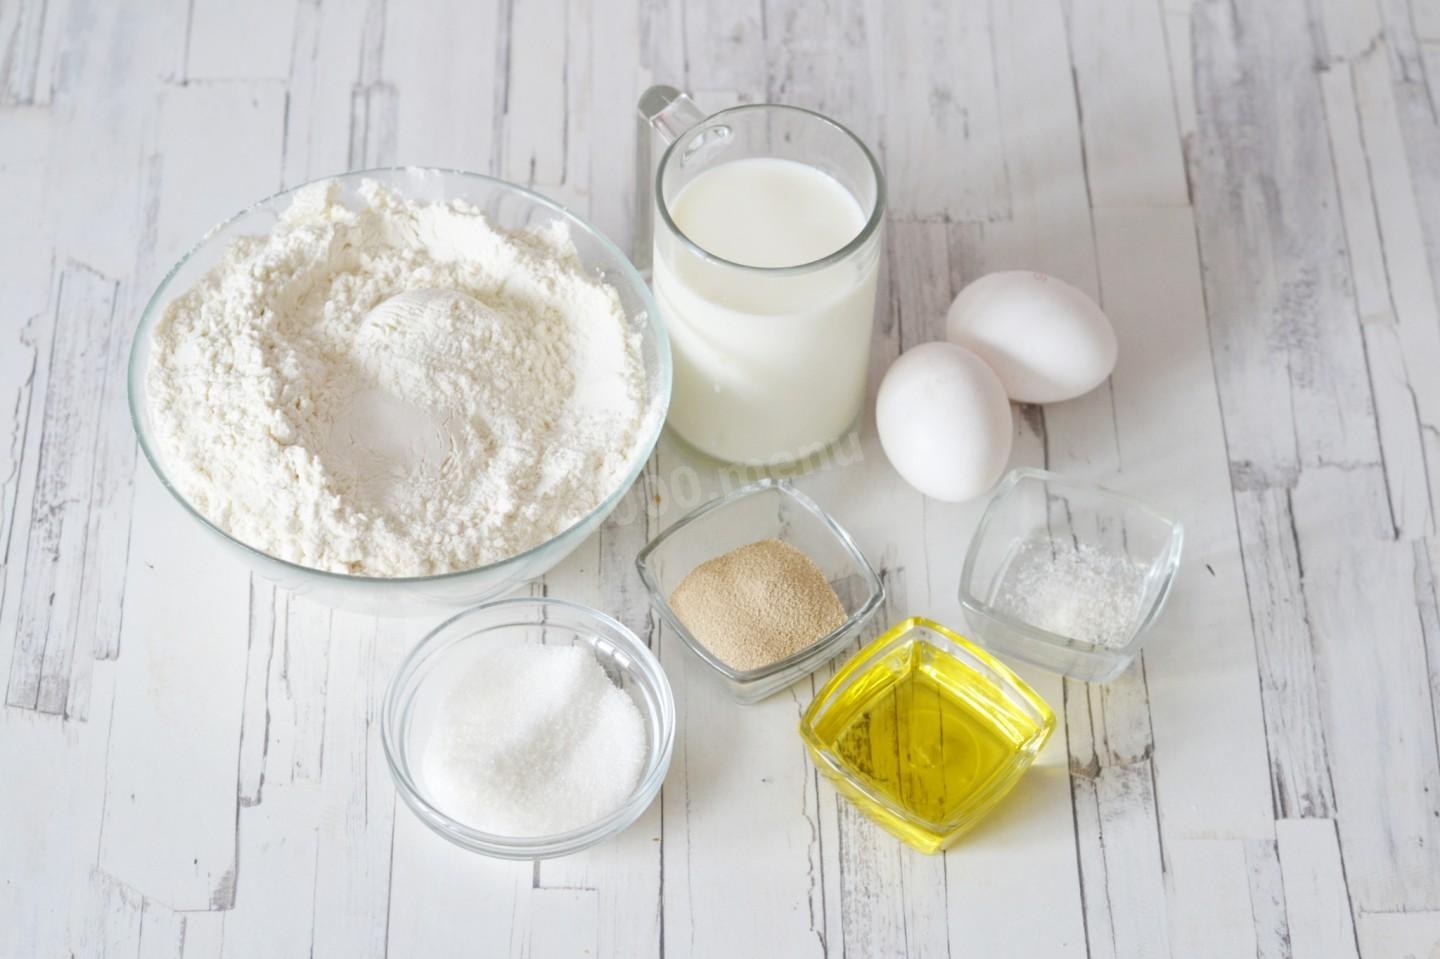 Мука масло маргарин. Ингредиенты для теста. Мука масло сахар. Мука молоко яйца сахар. Молоко с мукой и дрожжами.